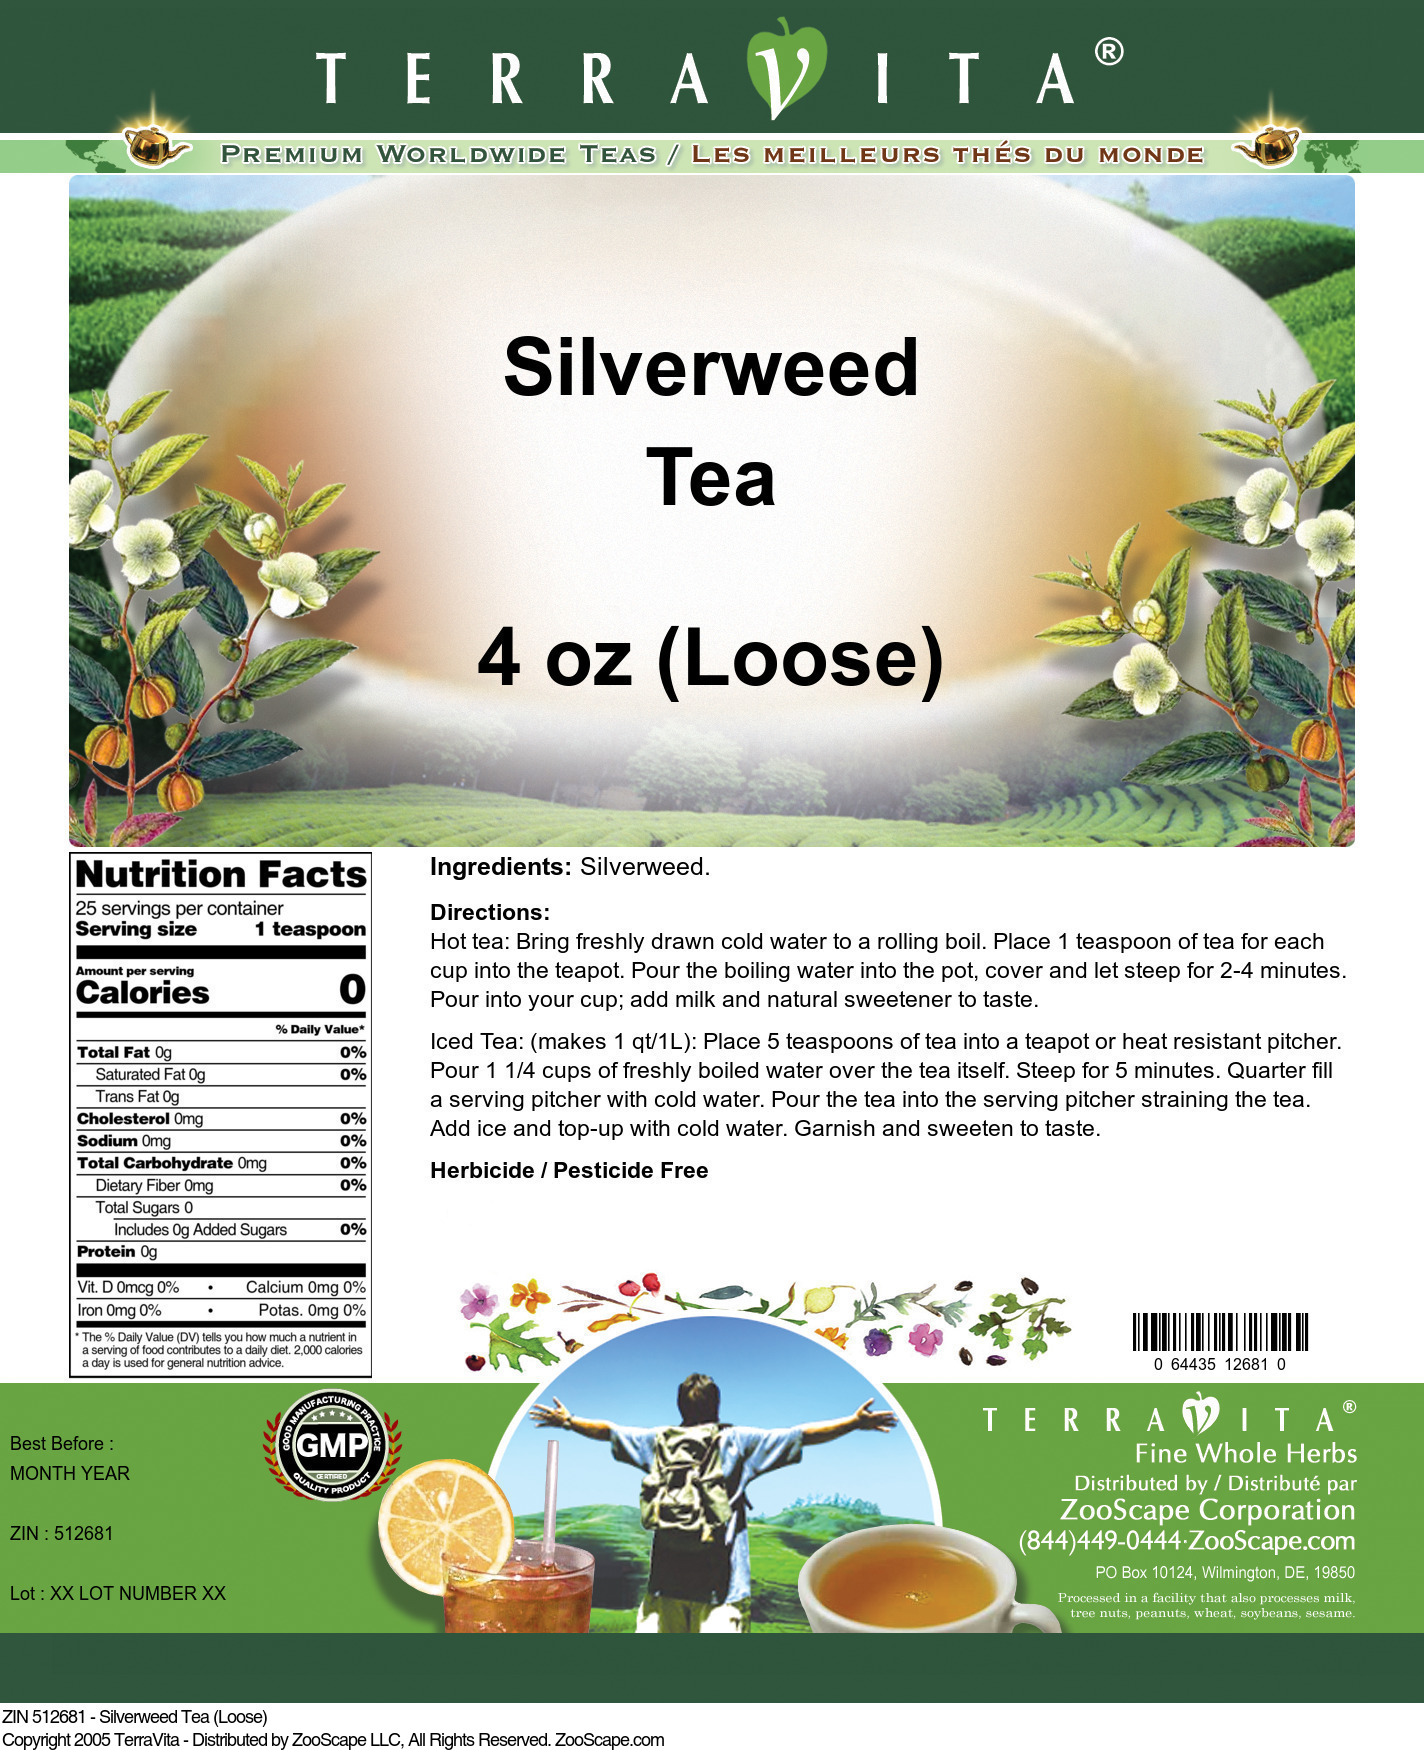 Silverweed Tea (Loose) - Label